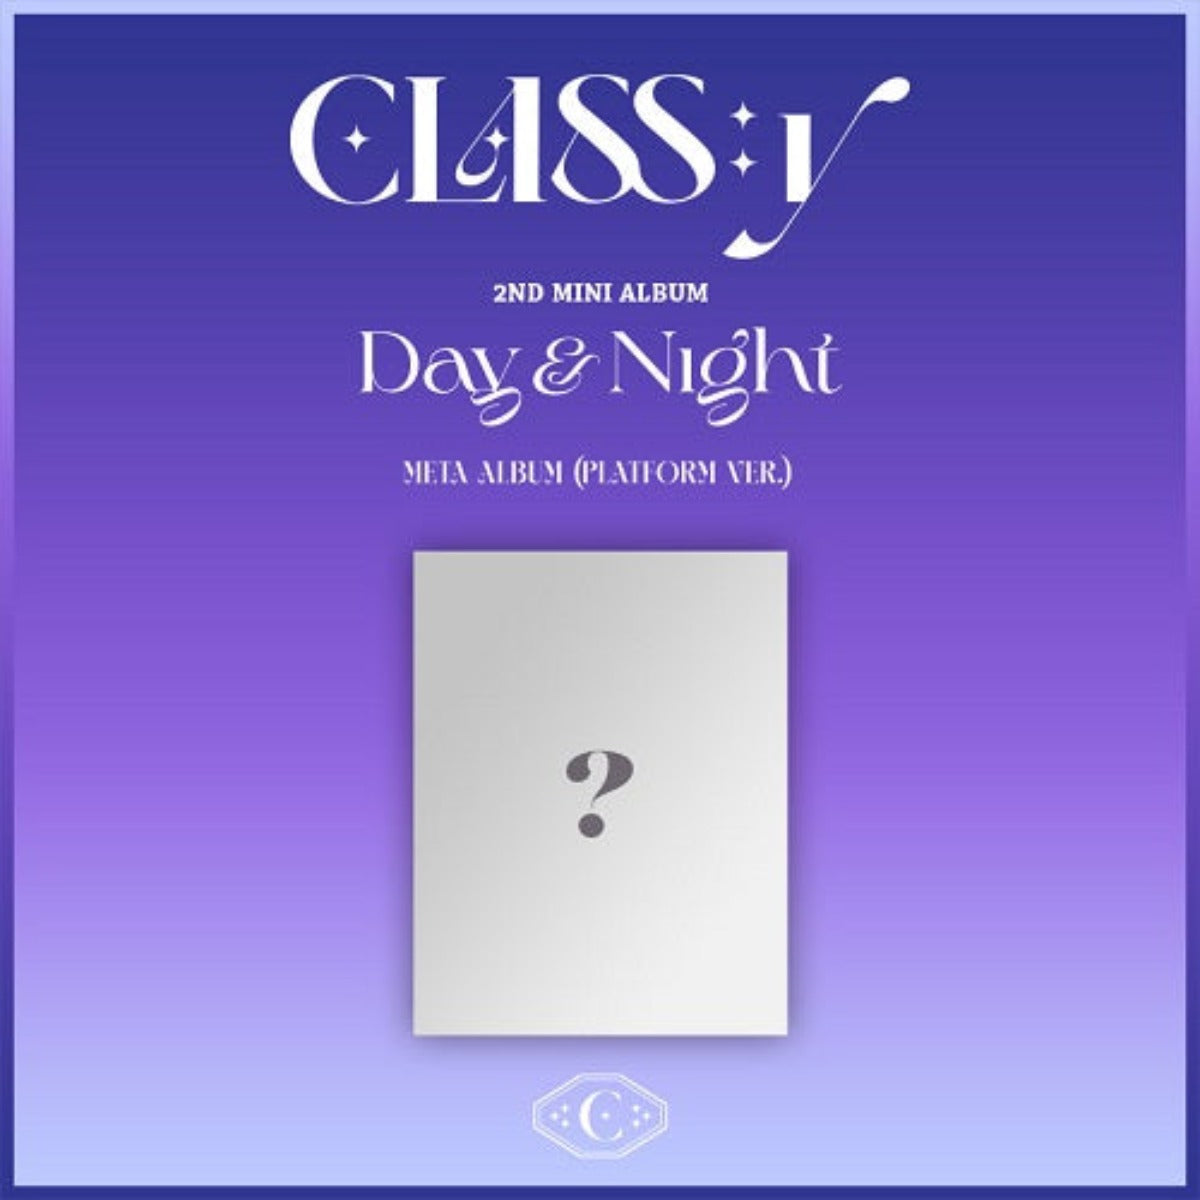 CLASS:y Mini Album Vol. 2 - Day & Night (Platform Version)